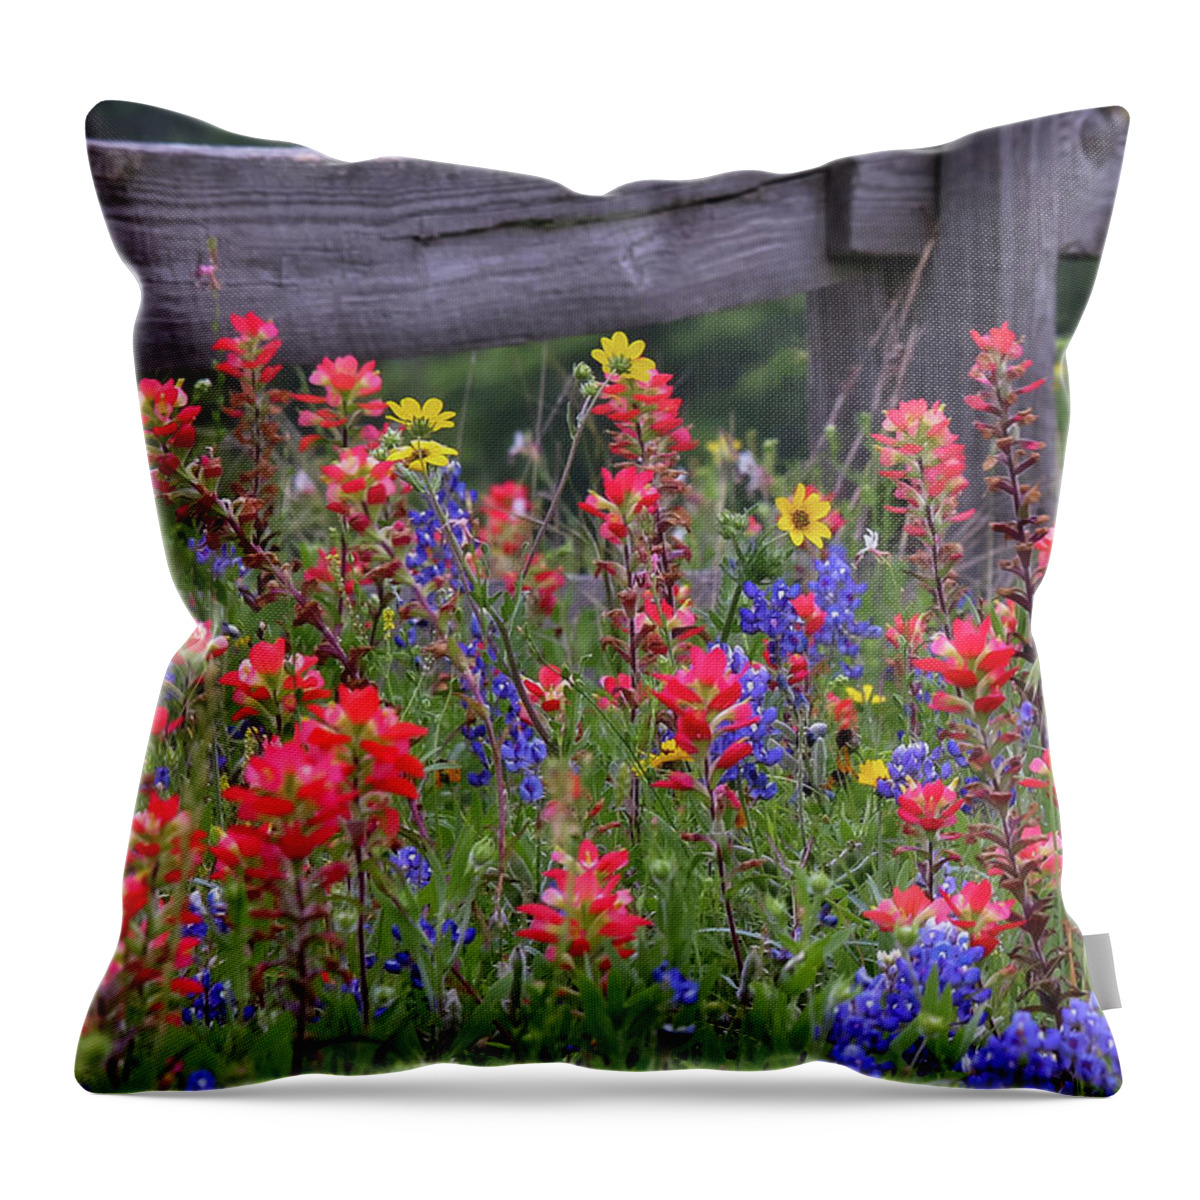 Blue Bonnets Throw Pillow featuring the photograph Wild Flowers by Robert Bellomy